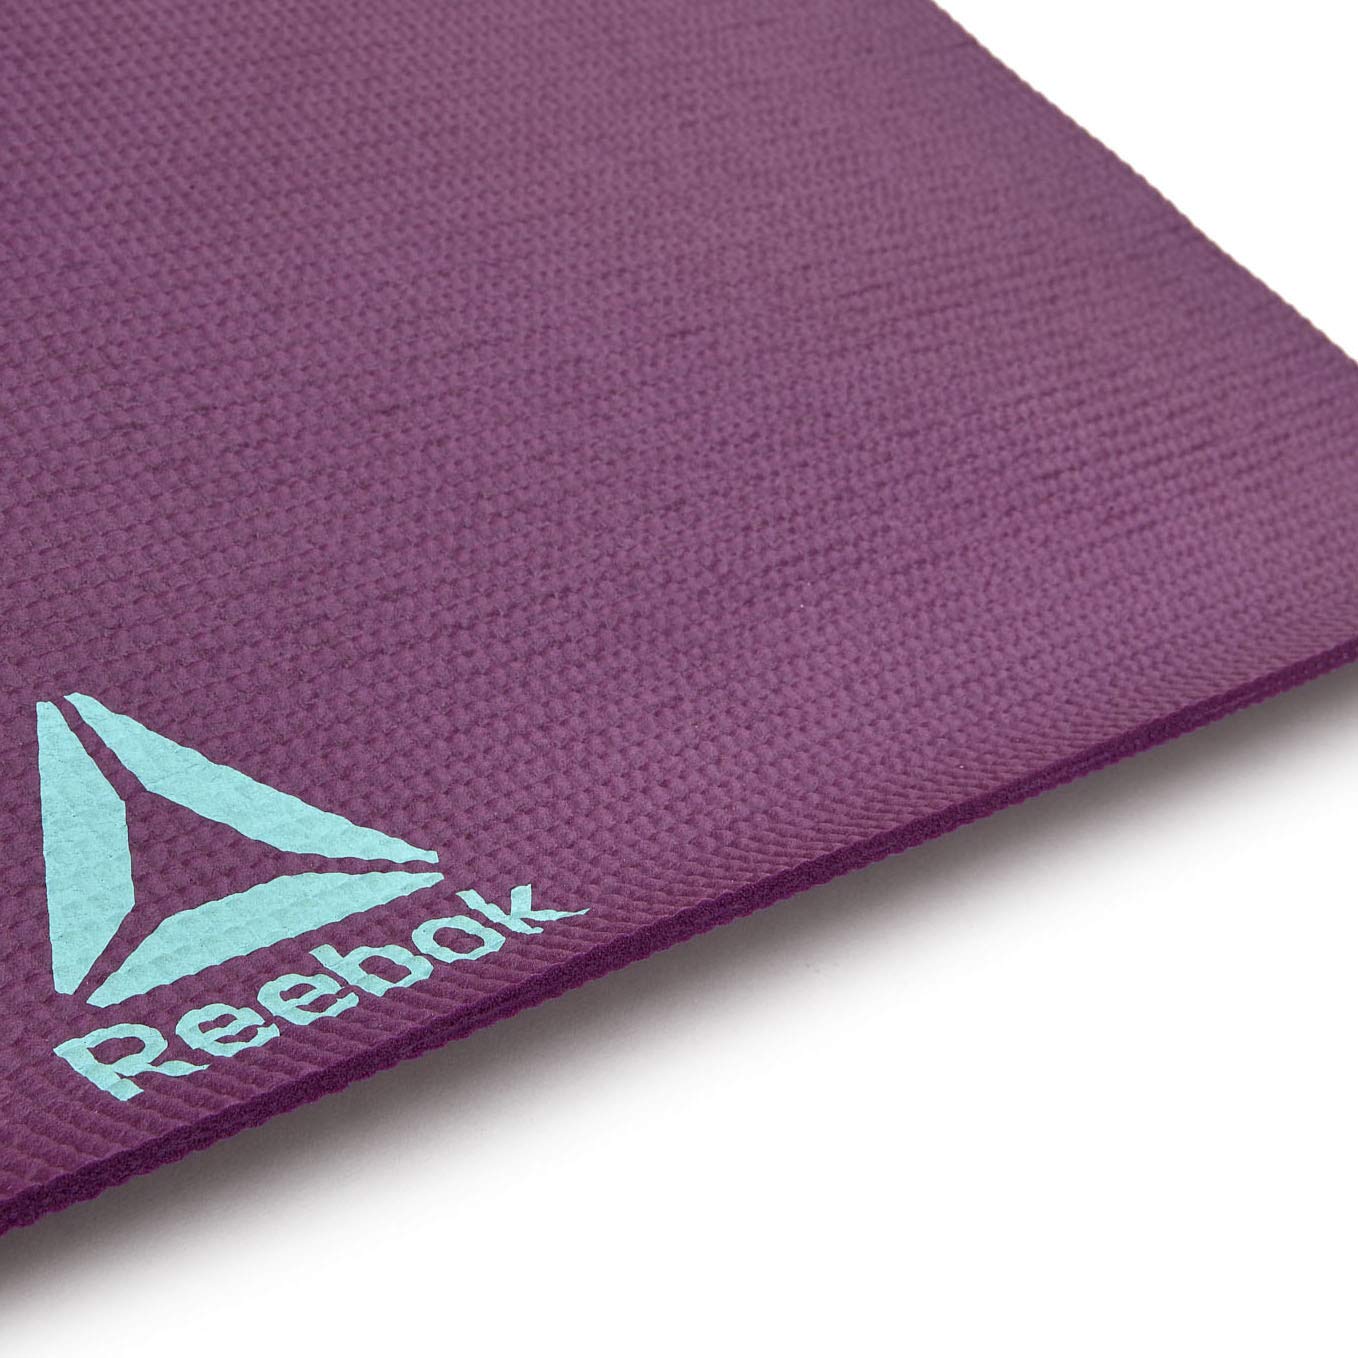 Reebok Double Sided Fitness Training Yoga Mat, 4 MM (Purple) - Best Price online Prokicksports.com